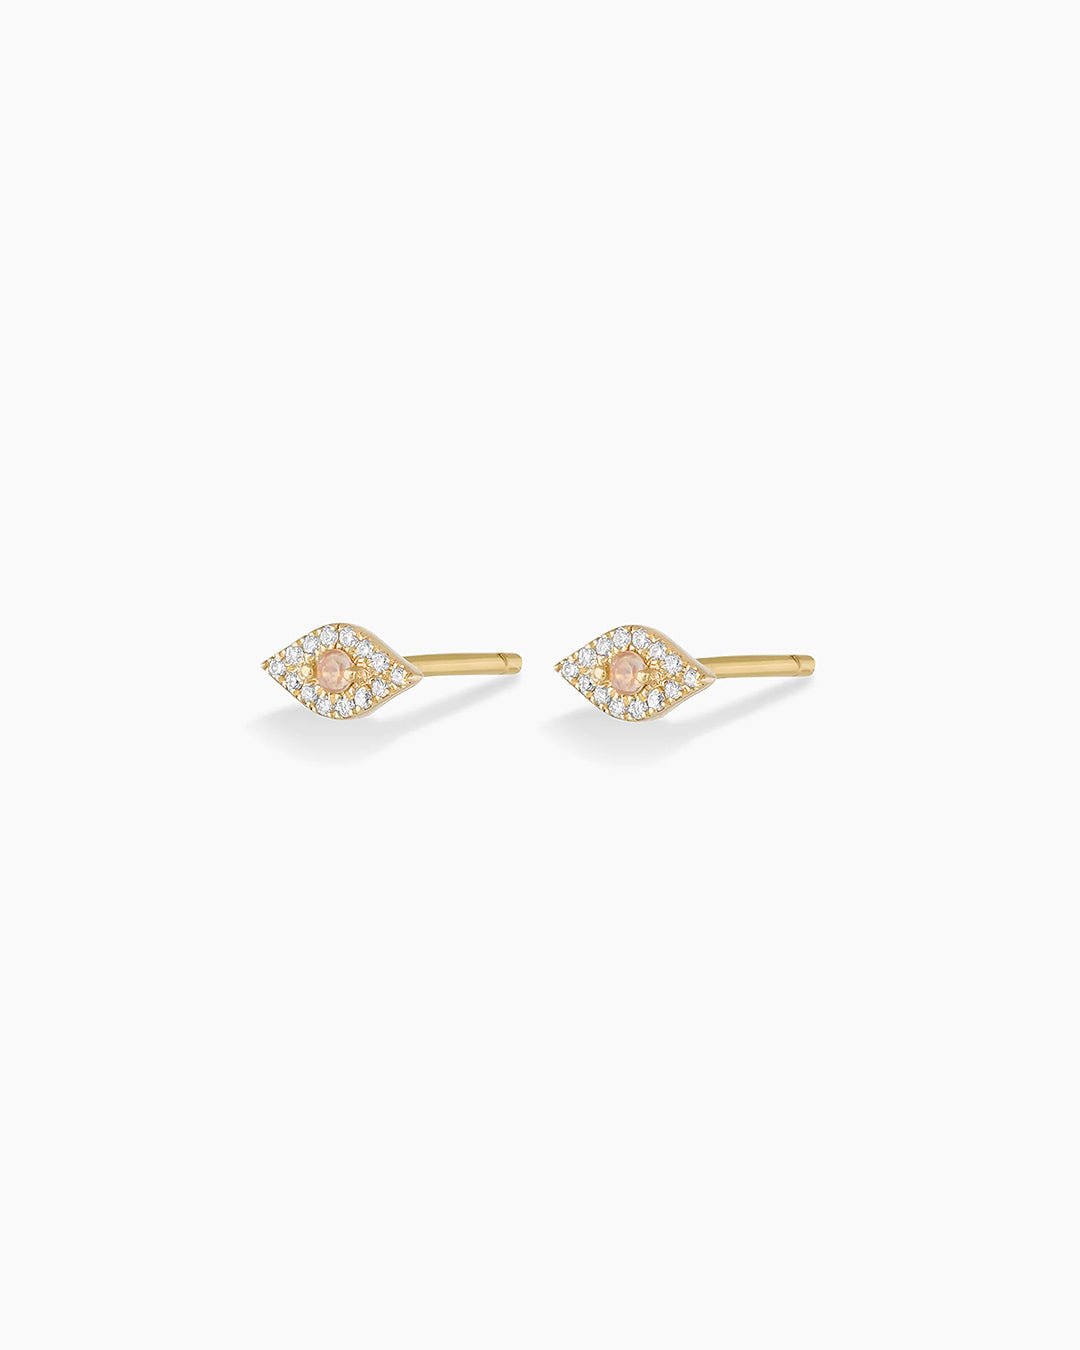 DiamondEvil Eye StudsDiamond and Opal earrings || option::14k Solid Gold, Pair